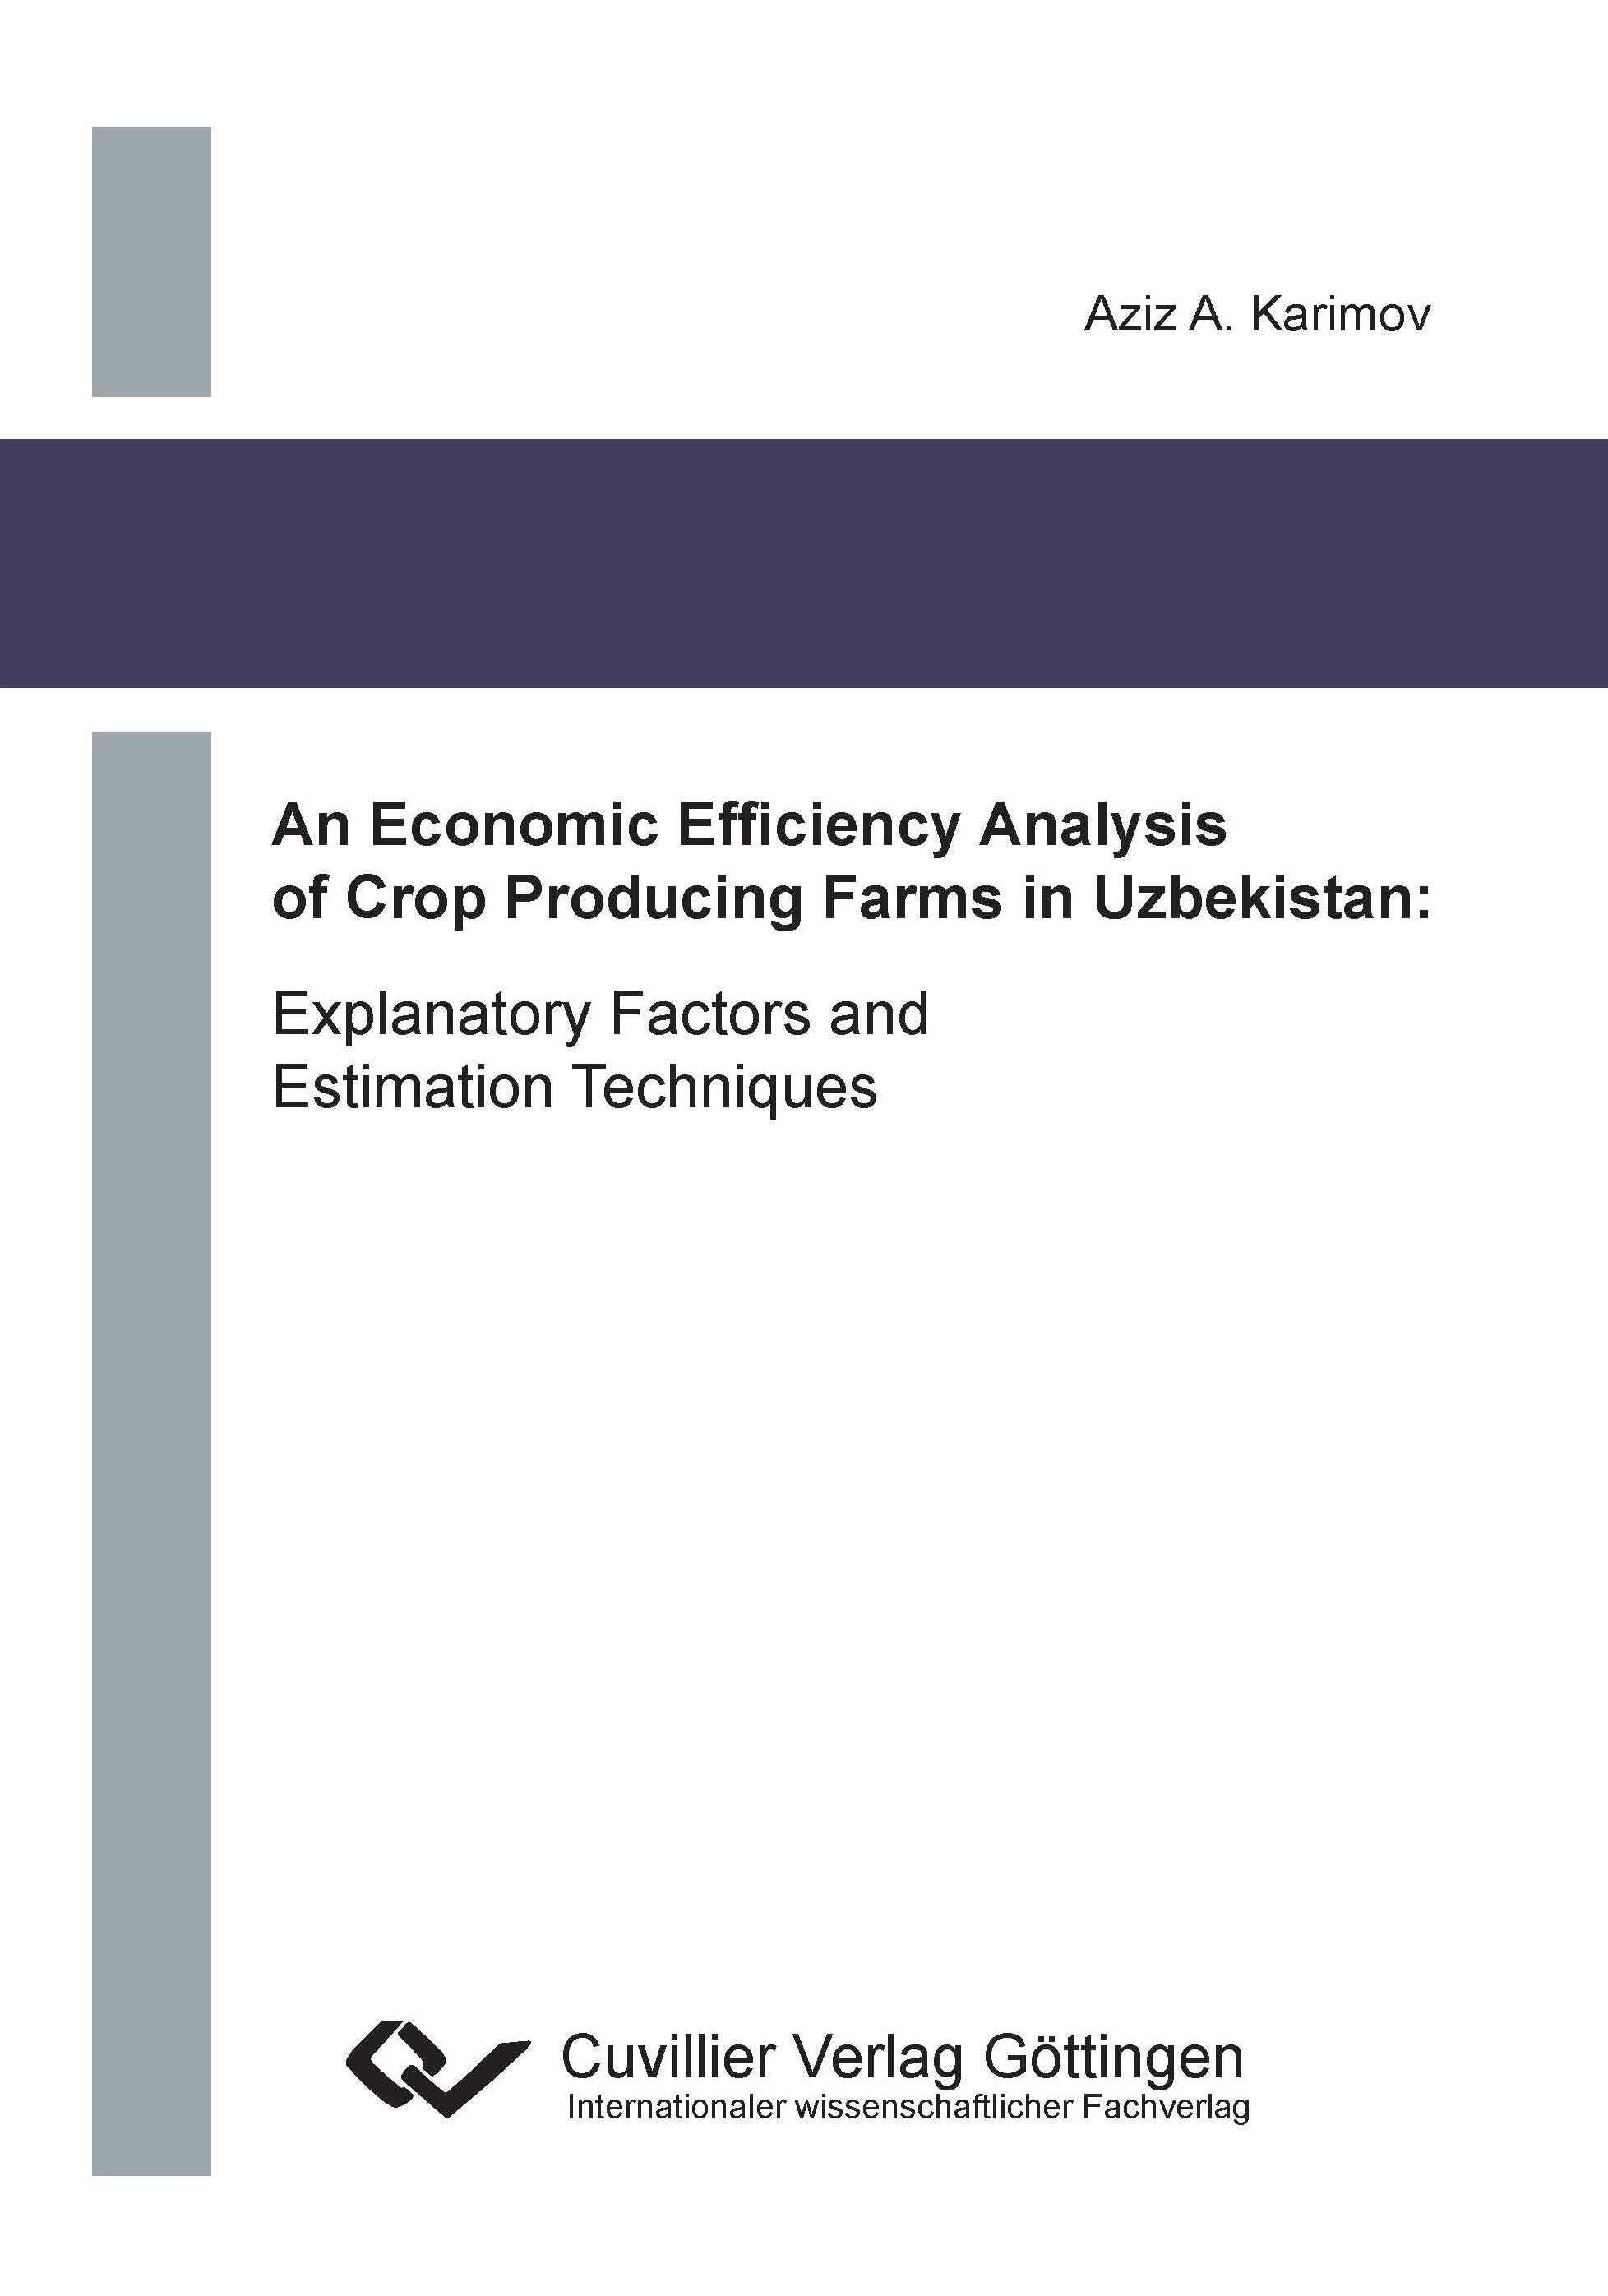 An Economic Efficiency Analysis of Crop Producing Farms in Uzbekistan - Karimov, Aziz